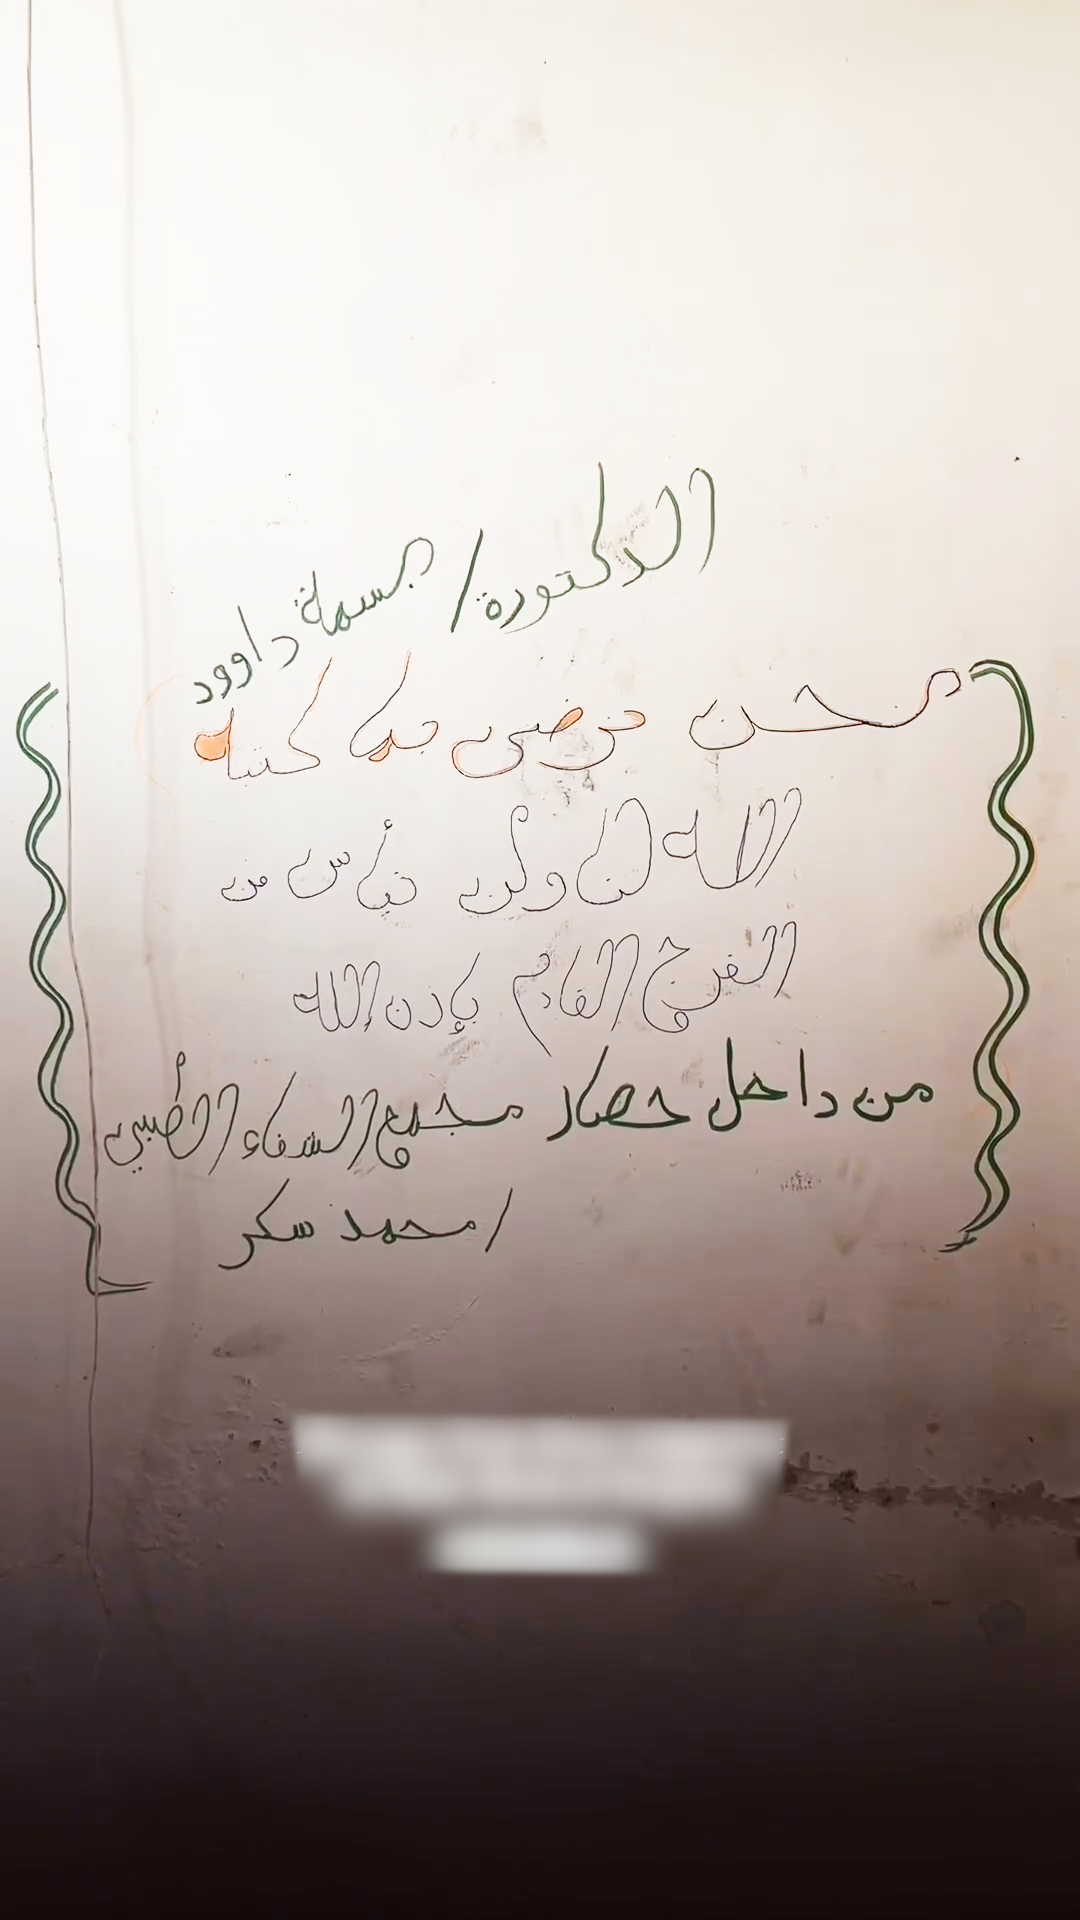 al shifa wall messages israel raid gaza